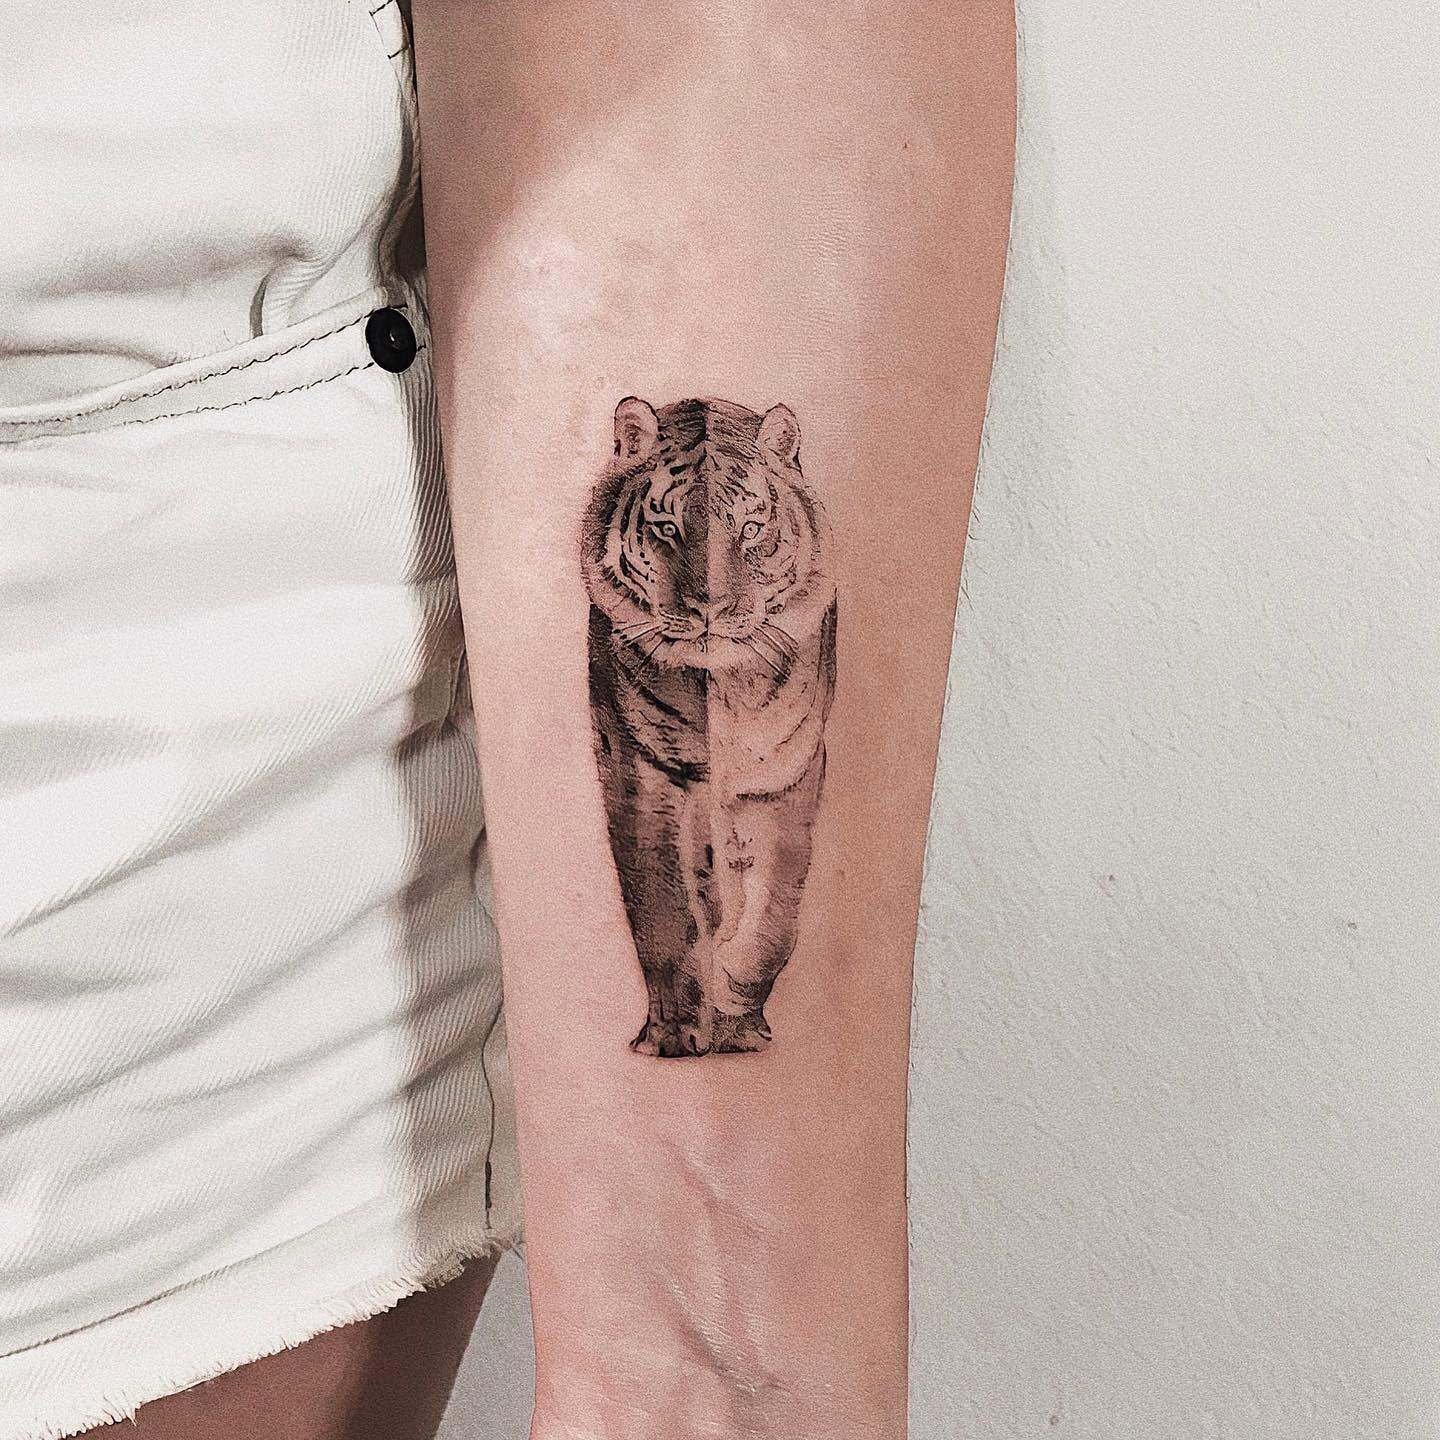 Tiger tattoo by batuhanyorukart